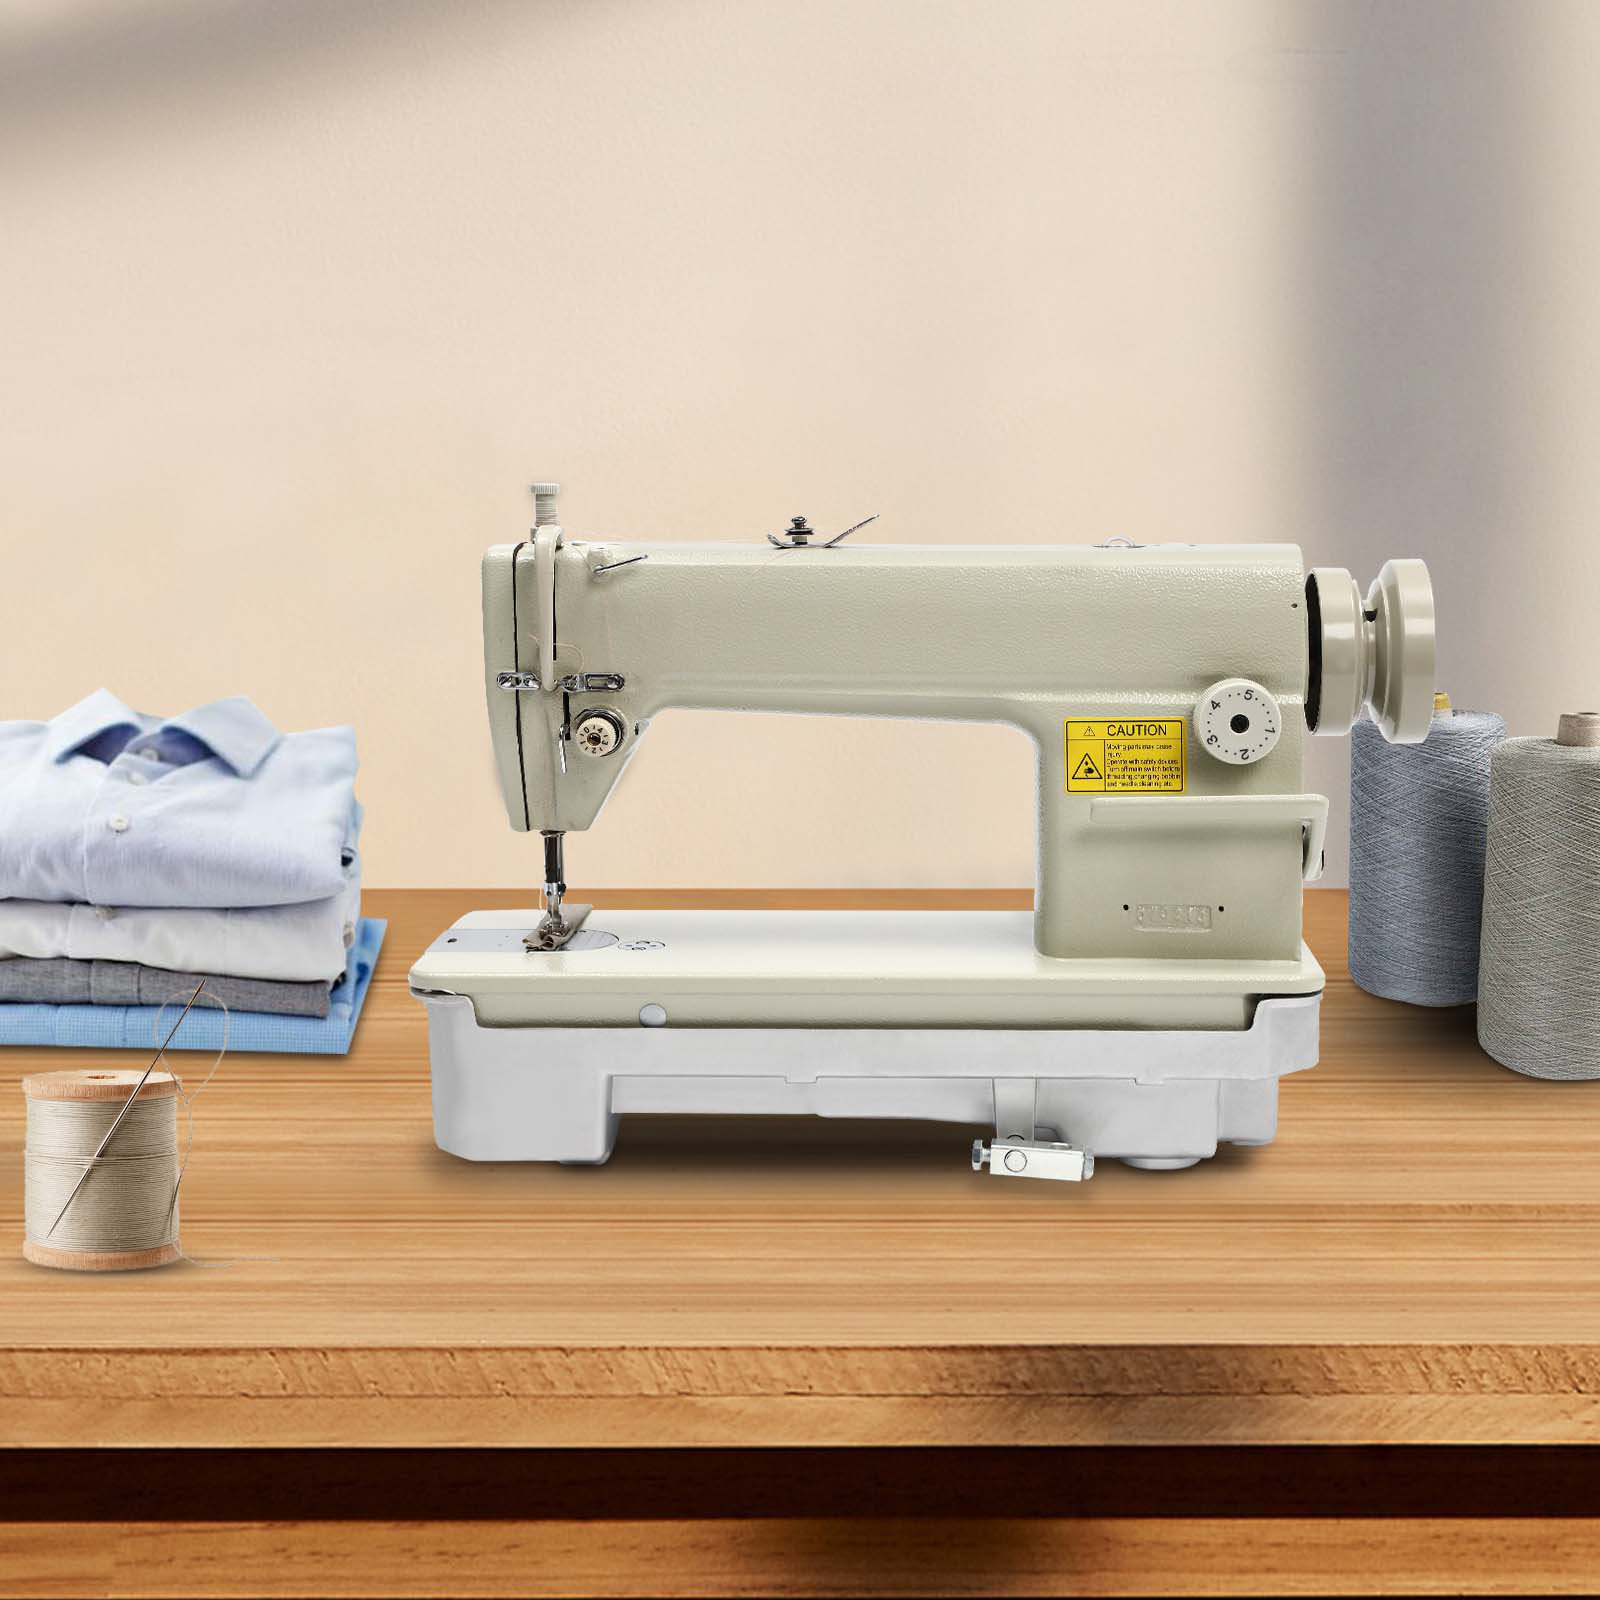 Easy sewing machine needle storage system: DIY Tutorial